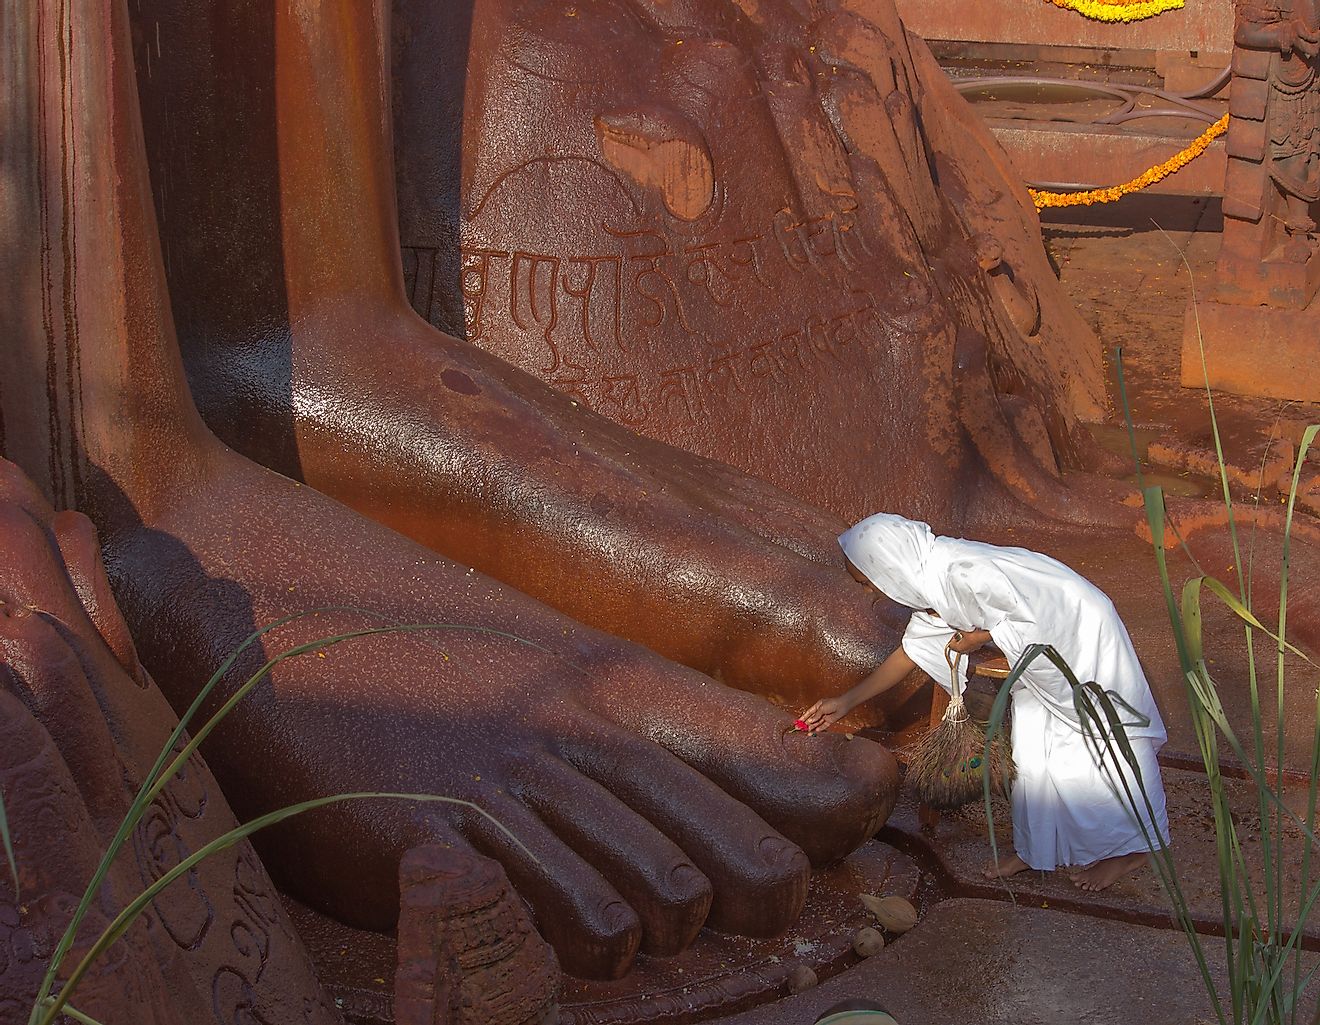 A Jain nun or Sadvi offering prayers to the gigantic feet of the monolith statue of Bahubali at Shravanabelagola near Mysuru in Karnataka / India. Editorial credit: PRIYA DARSHAN / Shutterstock.com